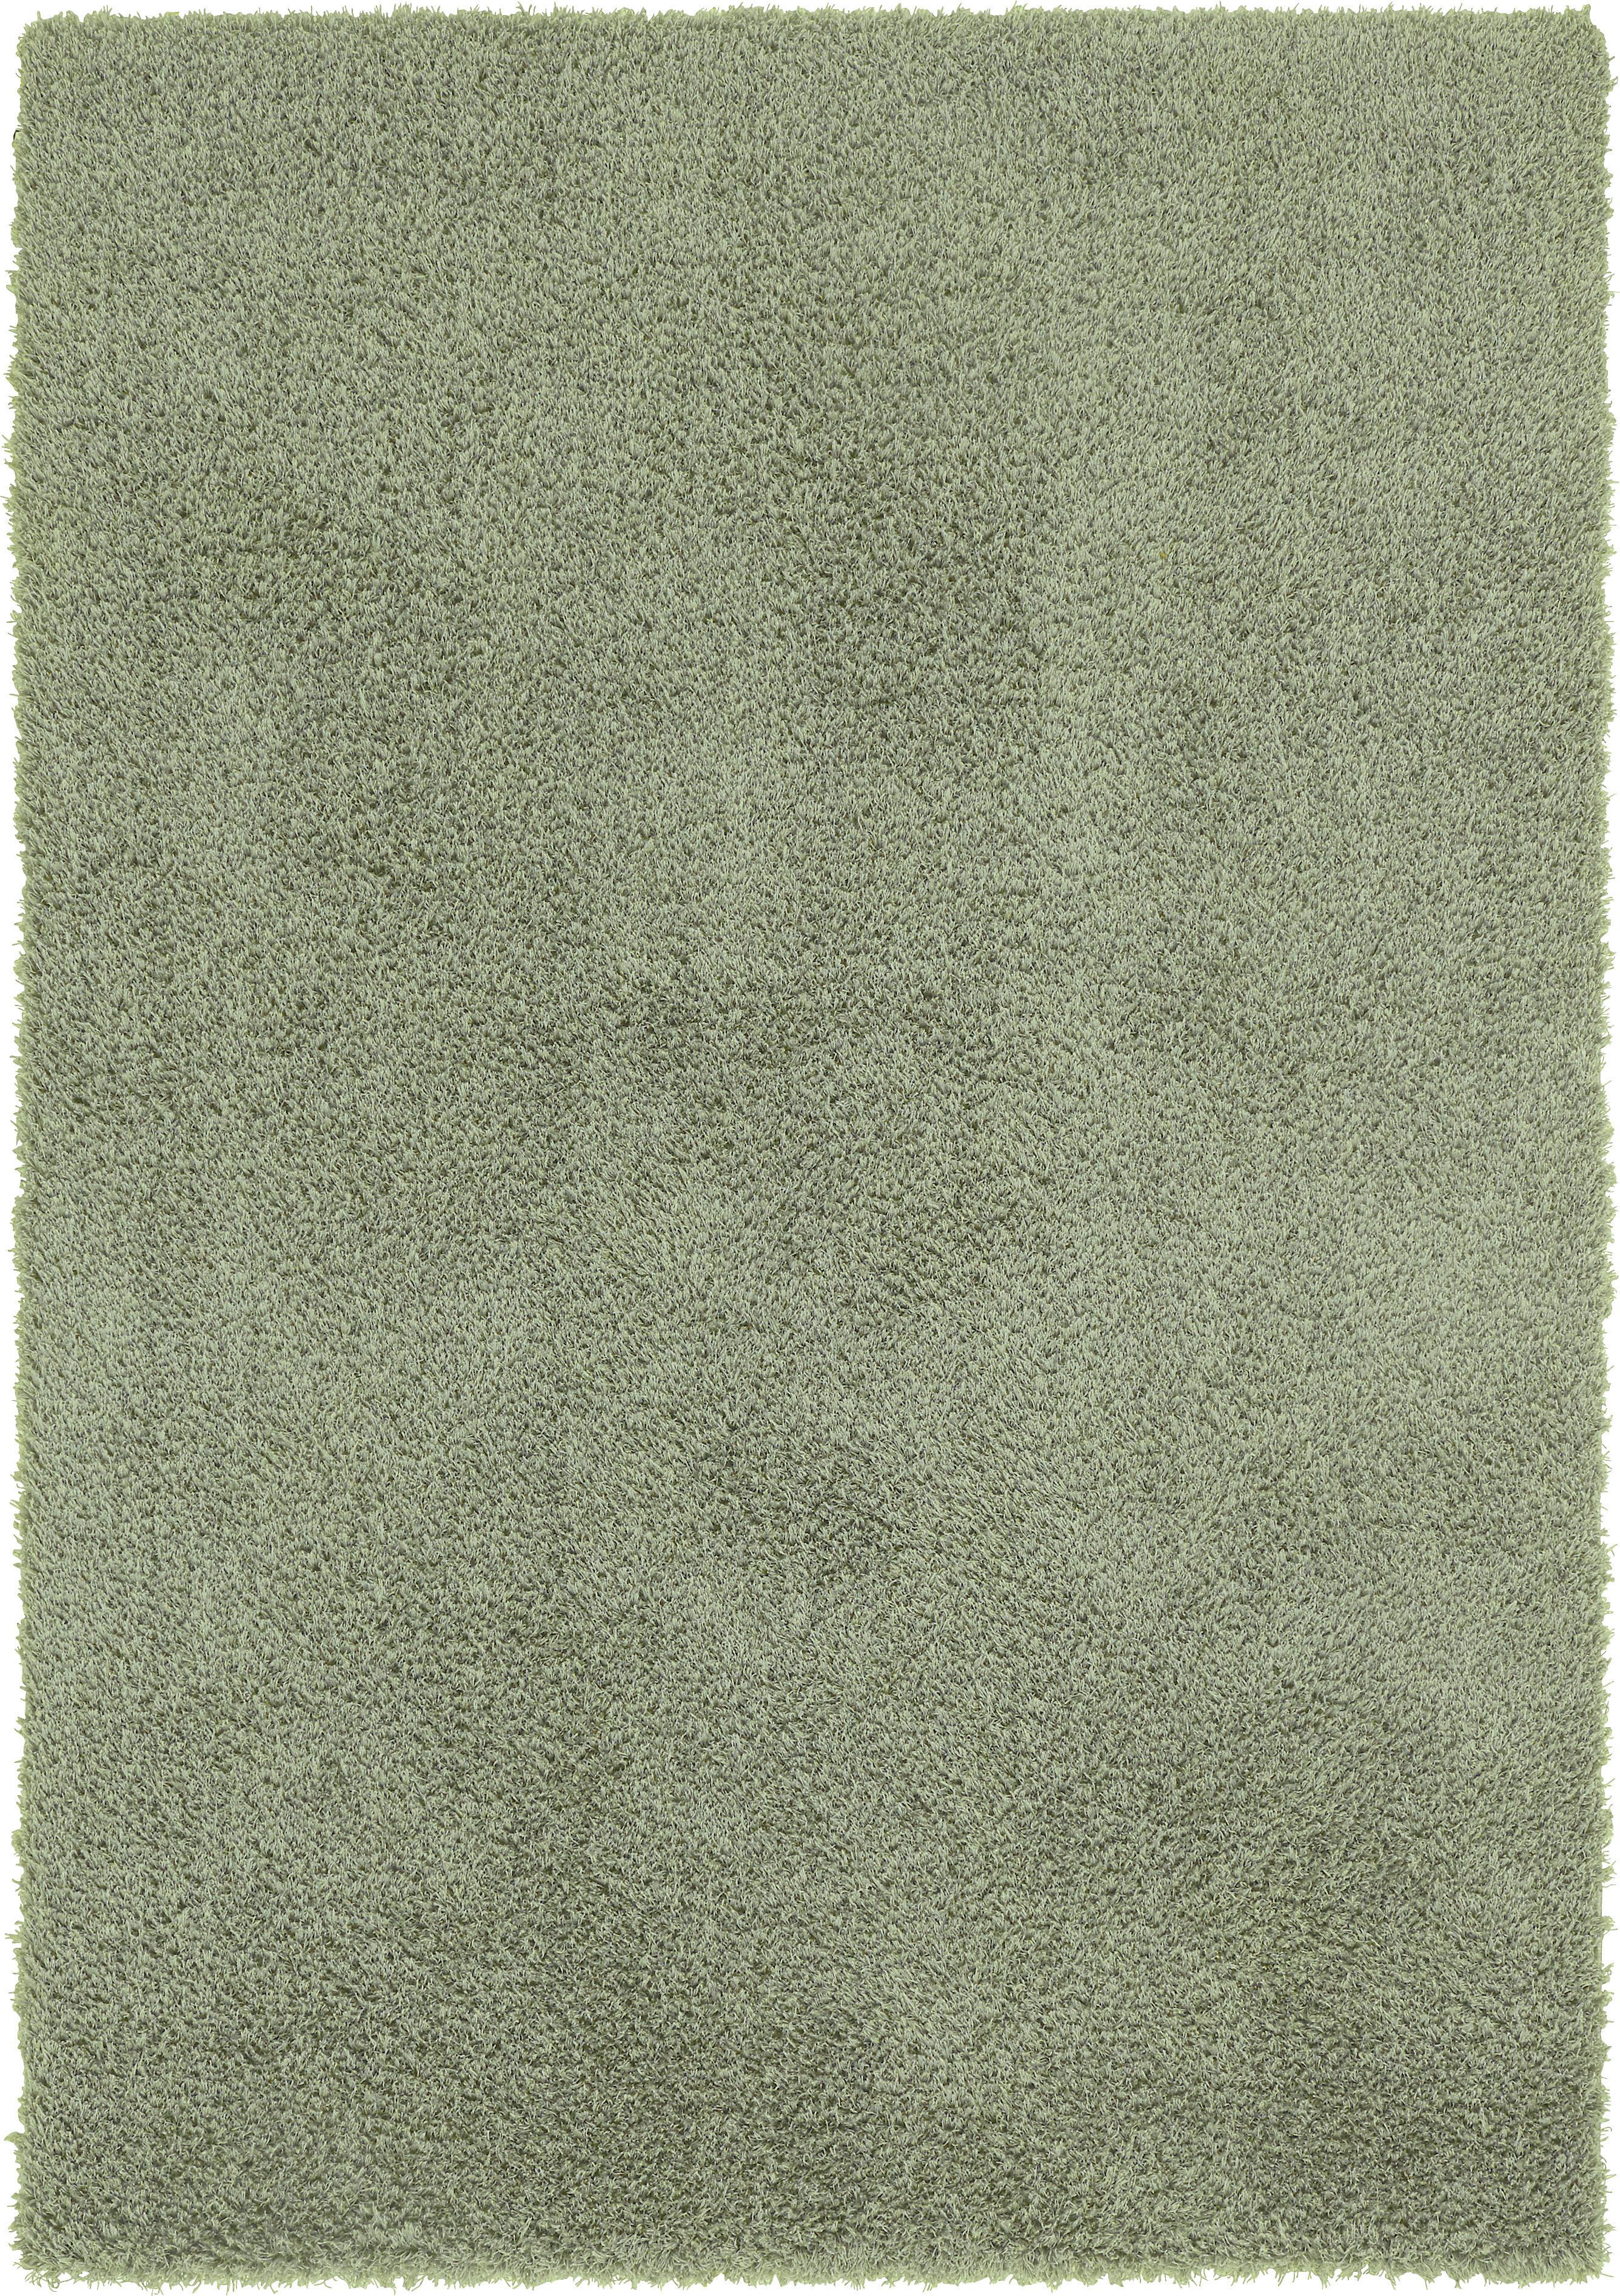 Shaggy Koberec Stefan 1, 80/150cm, Zelená - zelená, Moderní, textil (80/150cm) - Modern Living